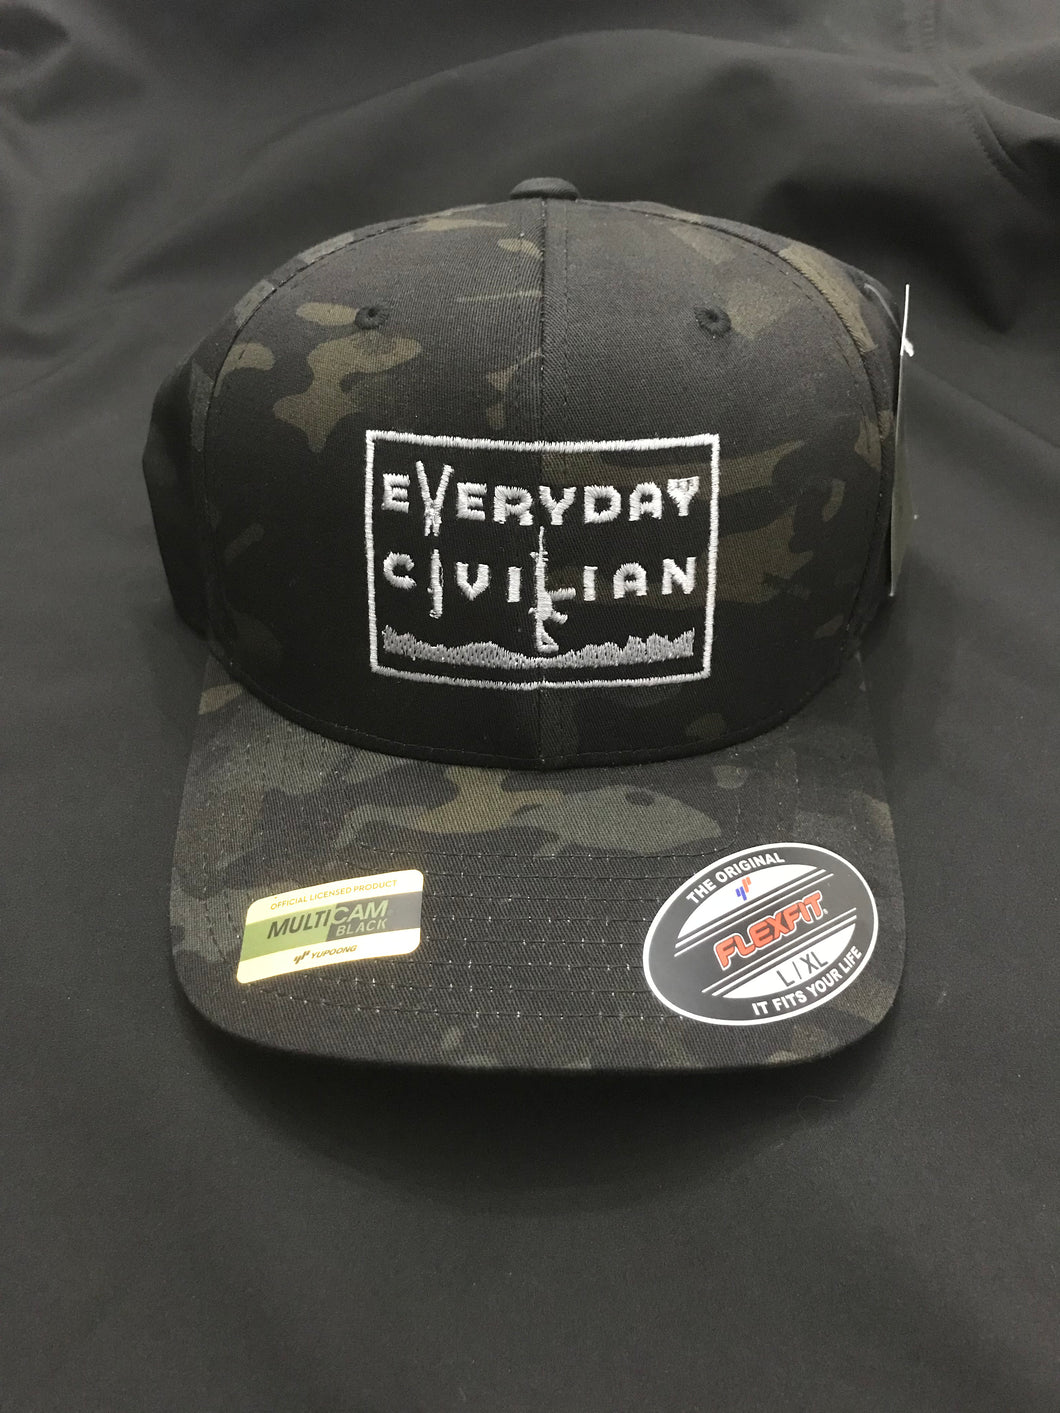 Multicam Black FlexFit S/M hat with grey EveryDayCivilian Logo